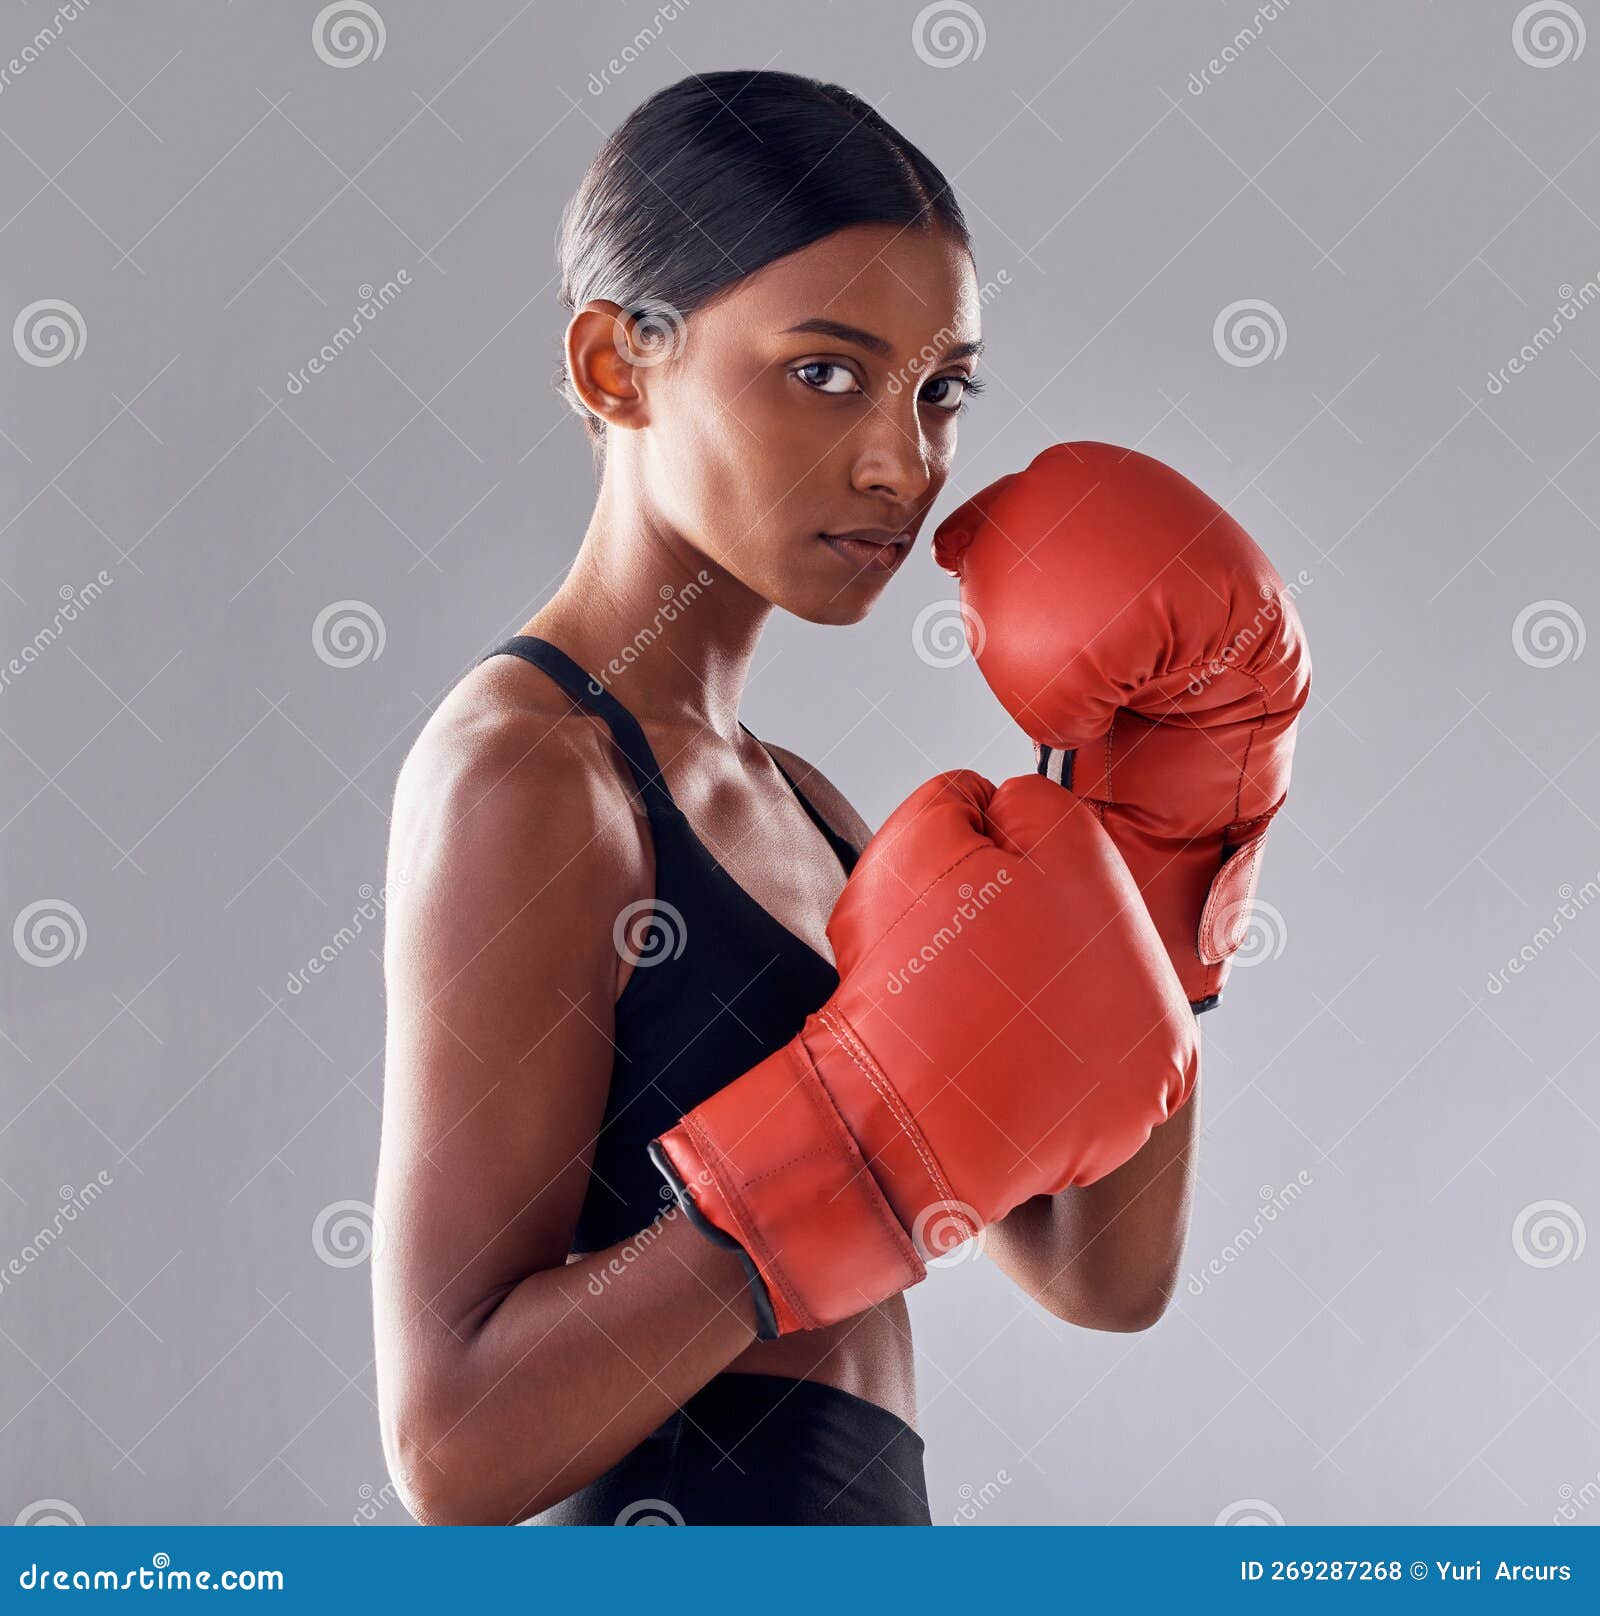 Female Boxers model  Model_Boxing